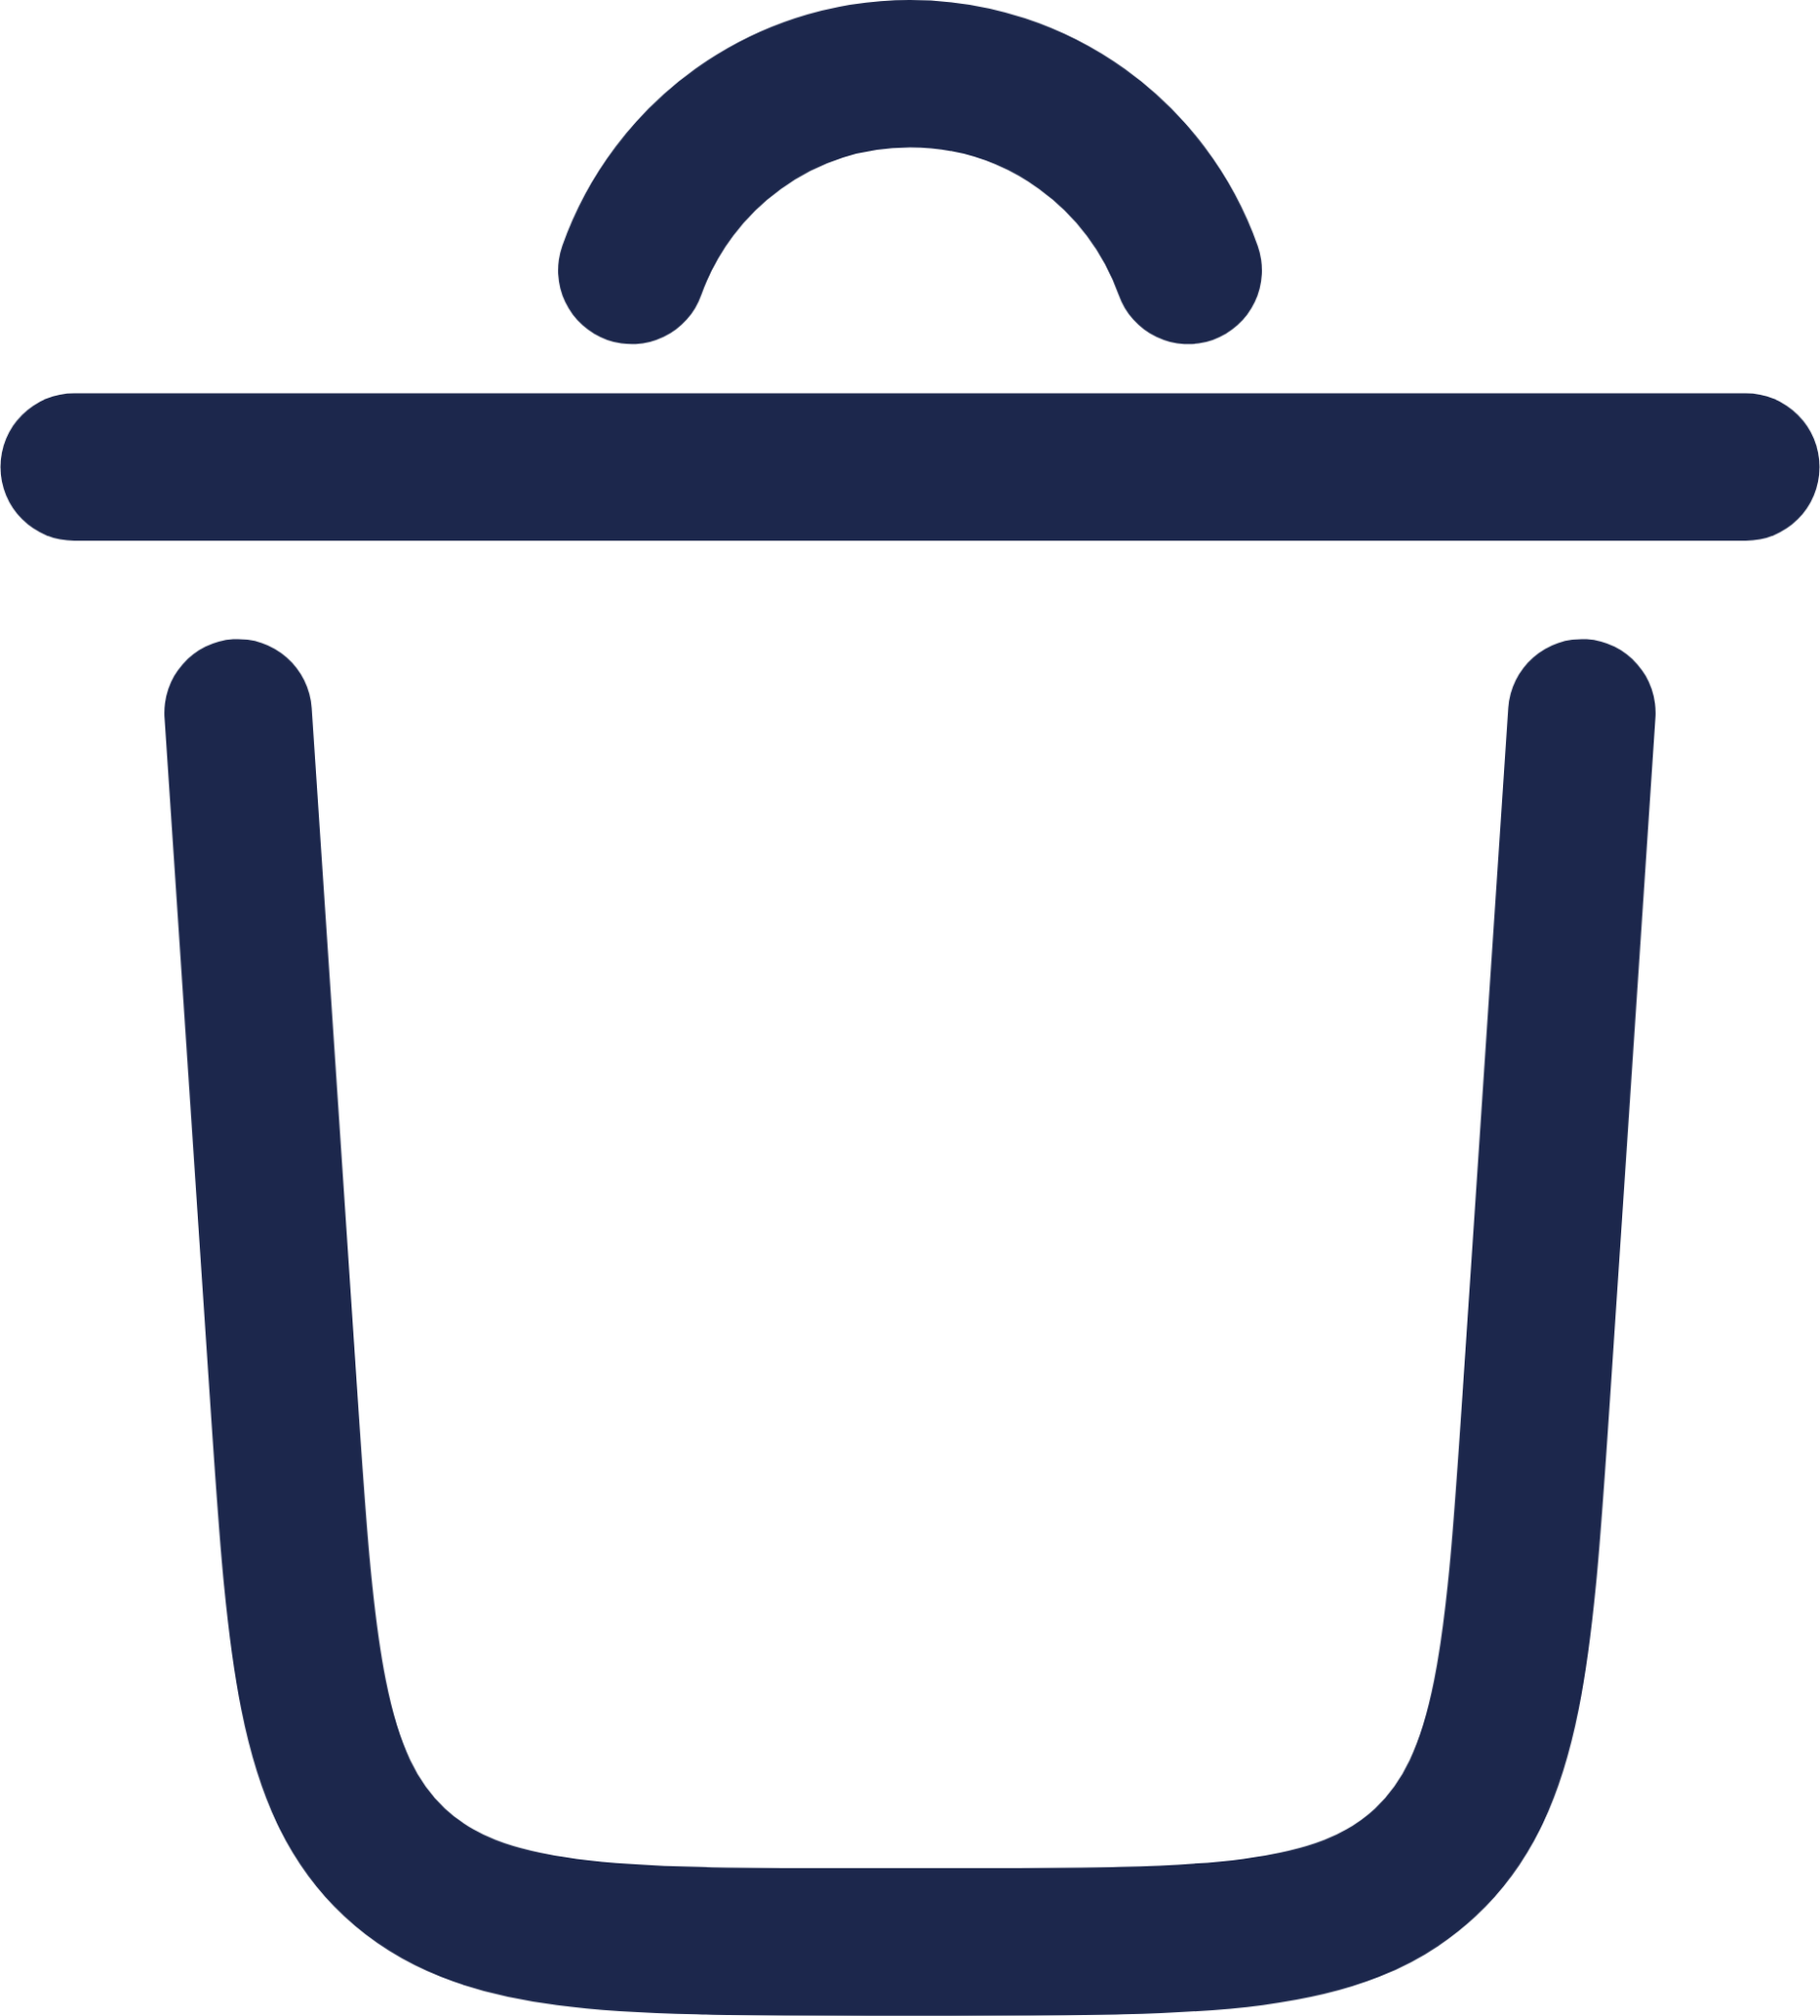 Trash Bin Minimalistic 2 icon